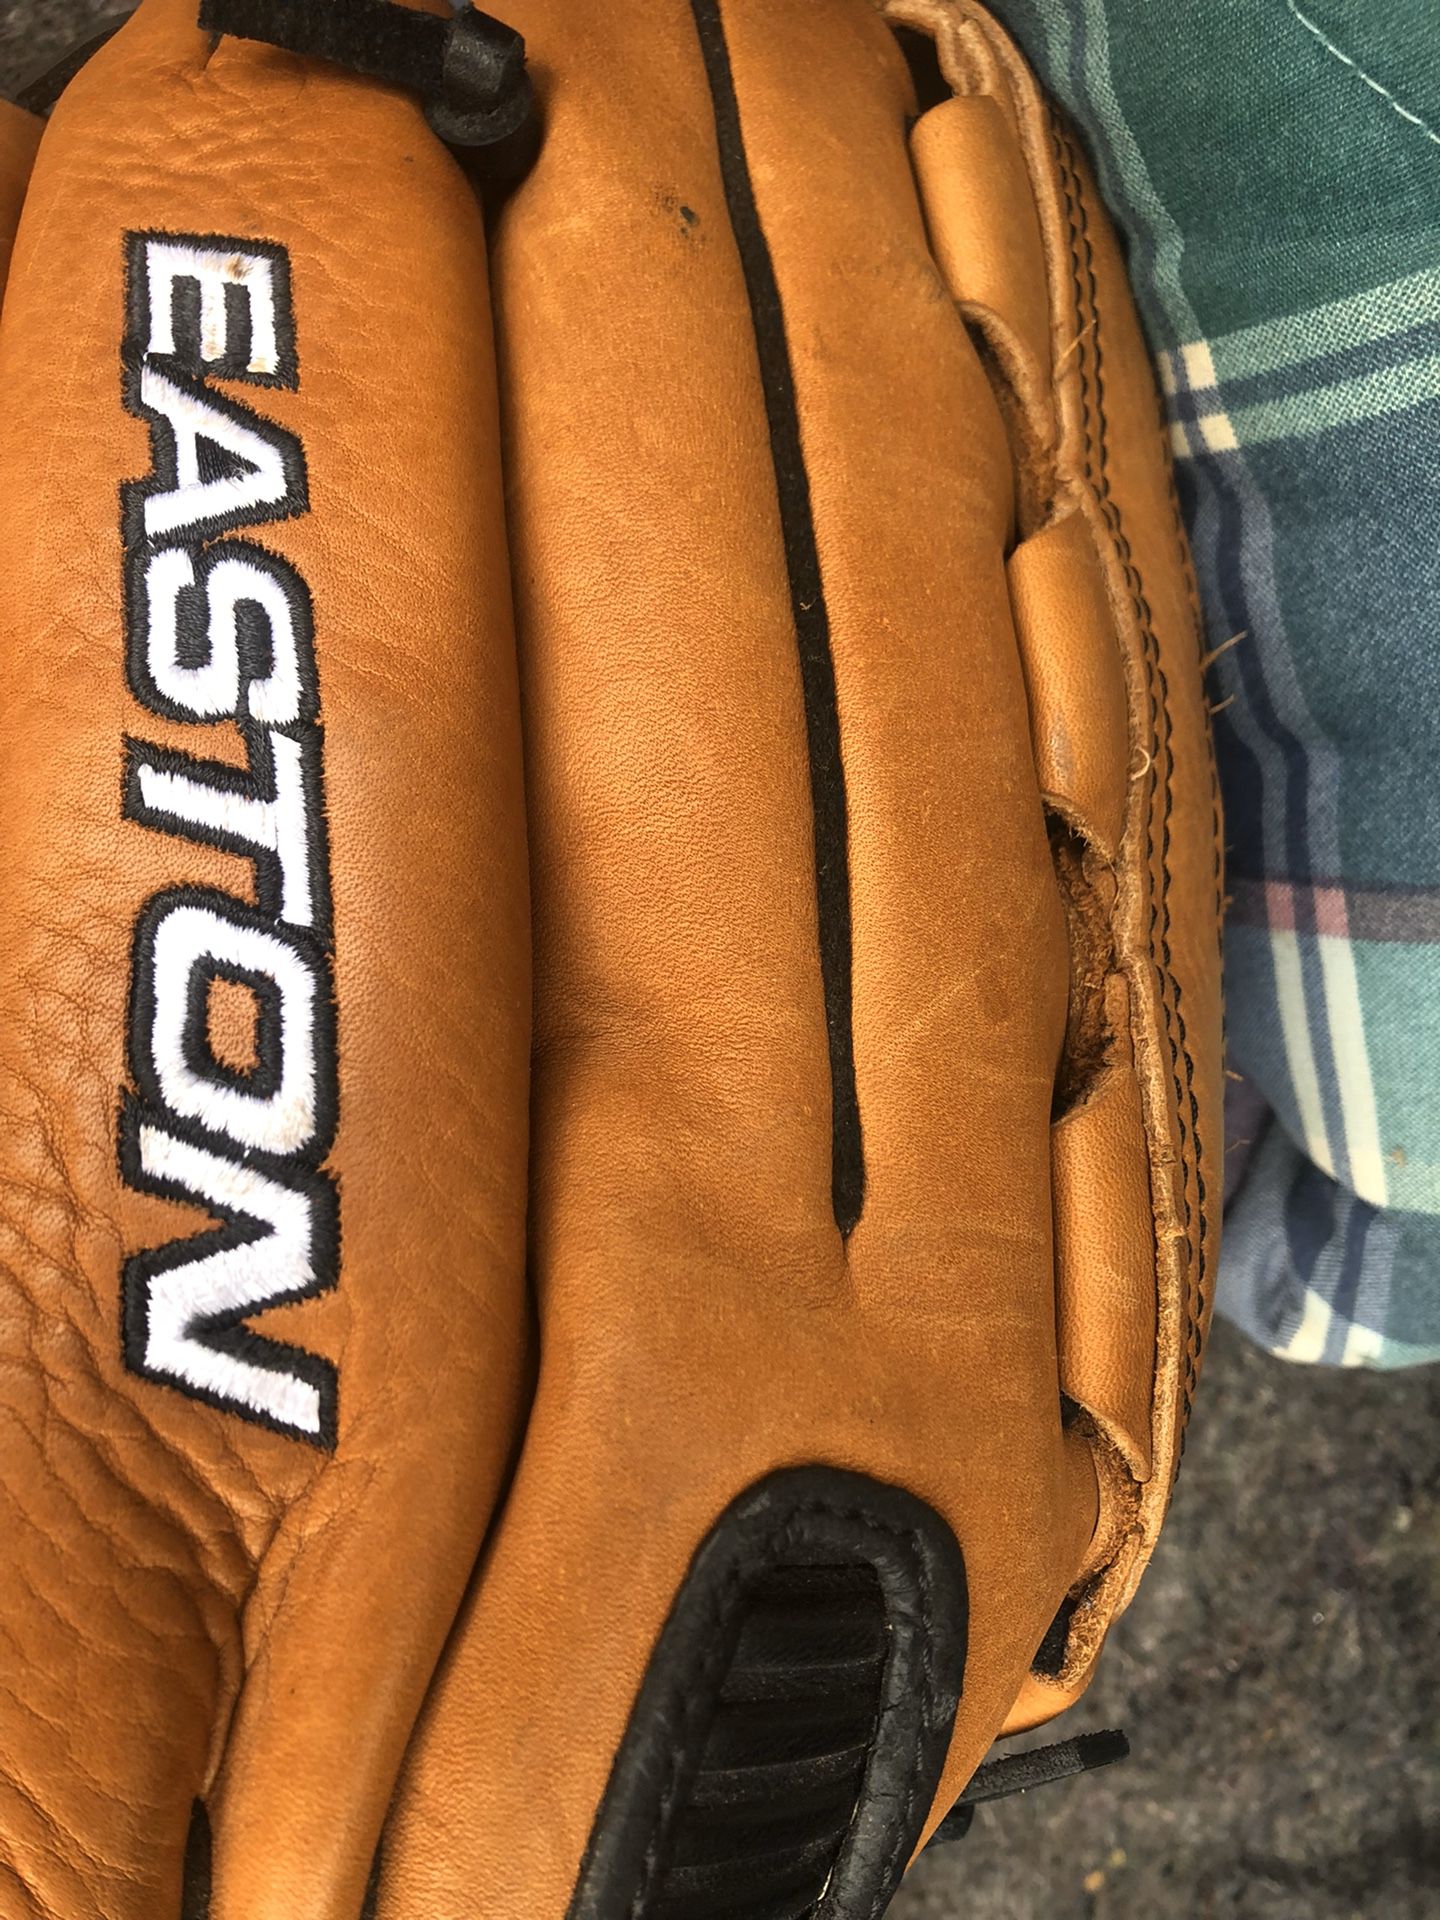 Easton softball glove